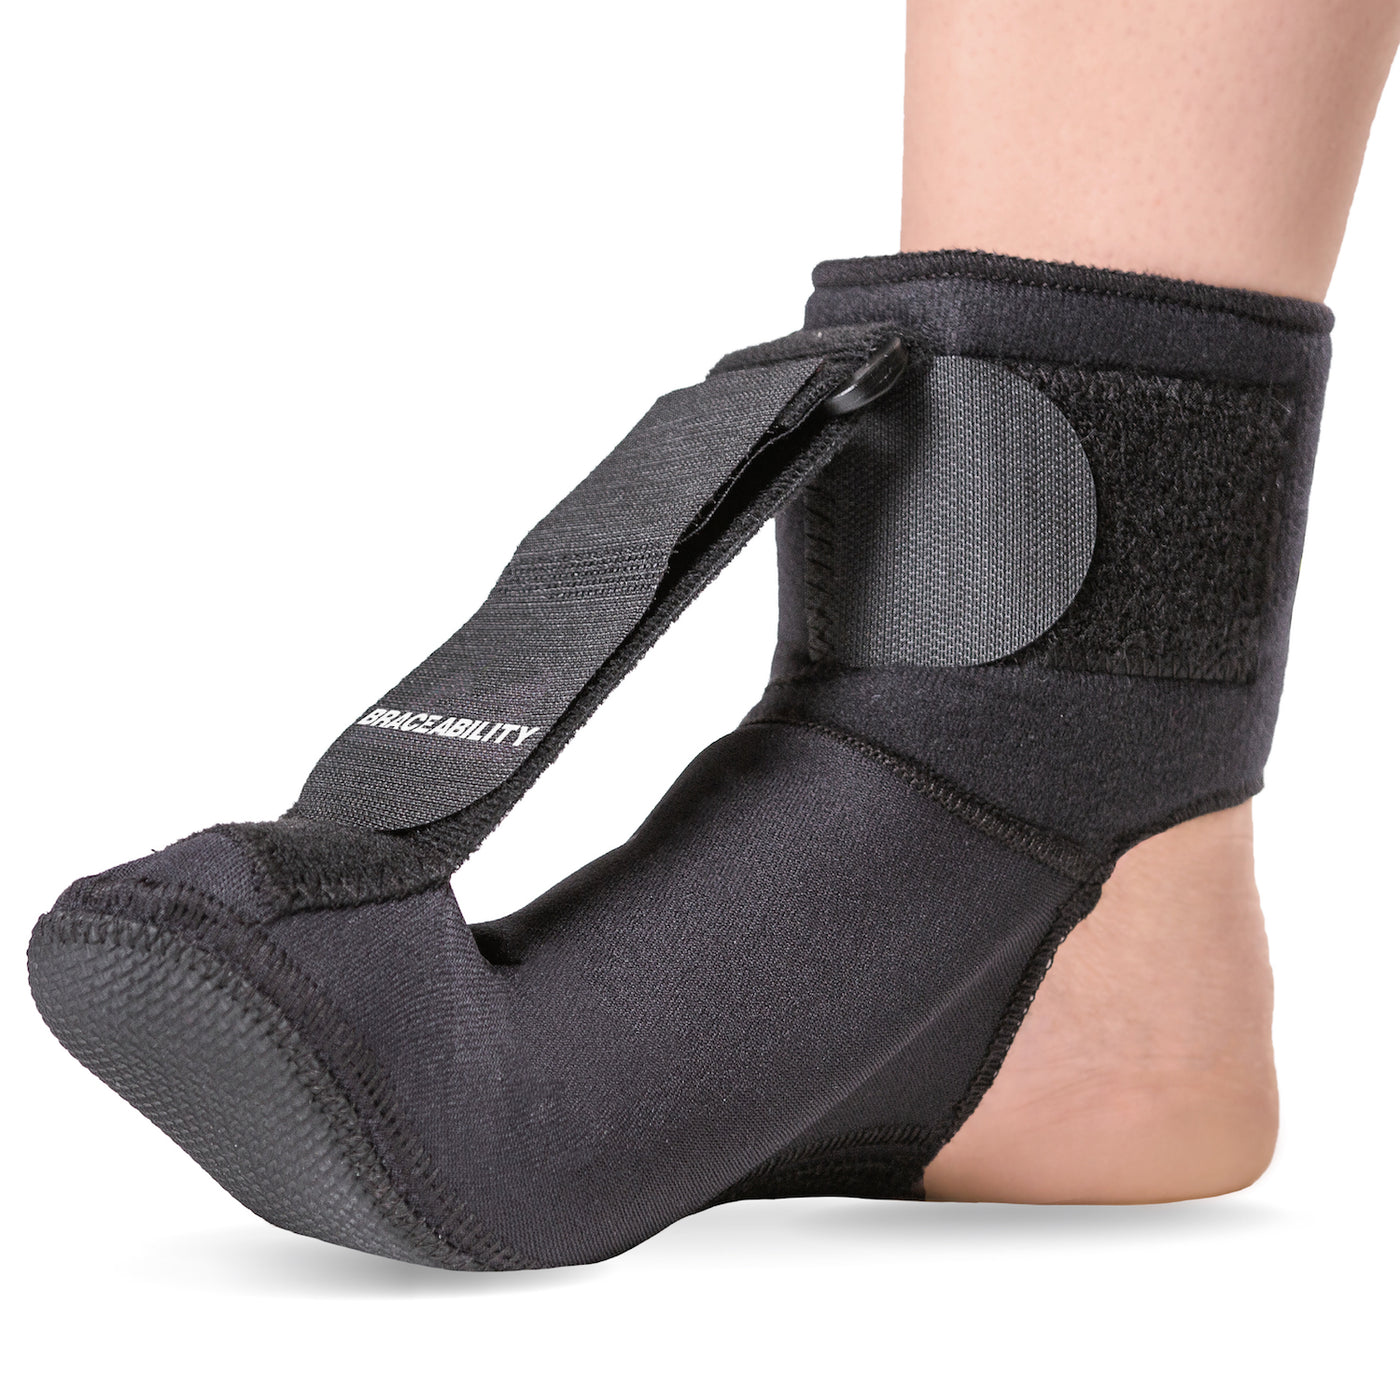 Ankle Brace Adjustable Plantar Fasciitis Night Splint - China Medical Foot  Ankle Night Splints, Night Splint Foot Brace